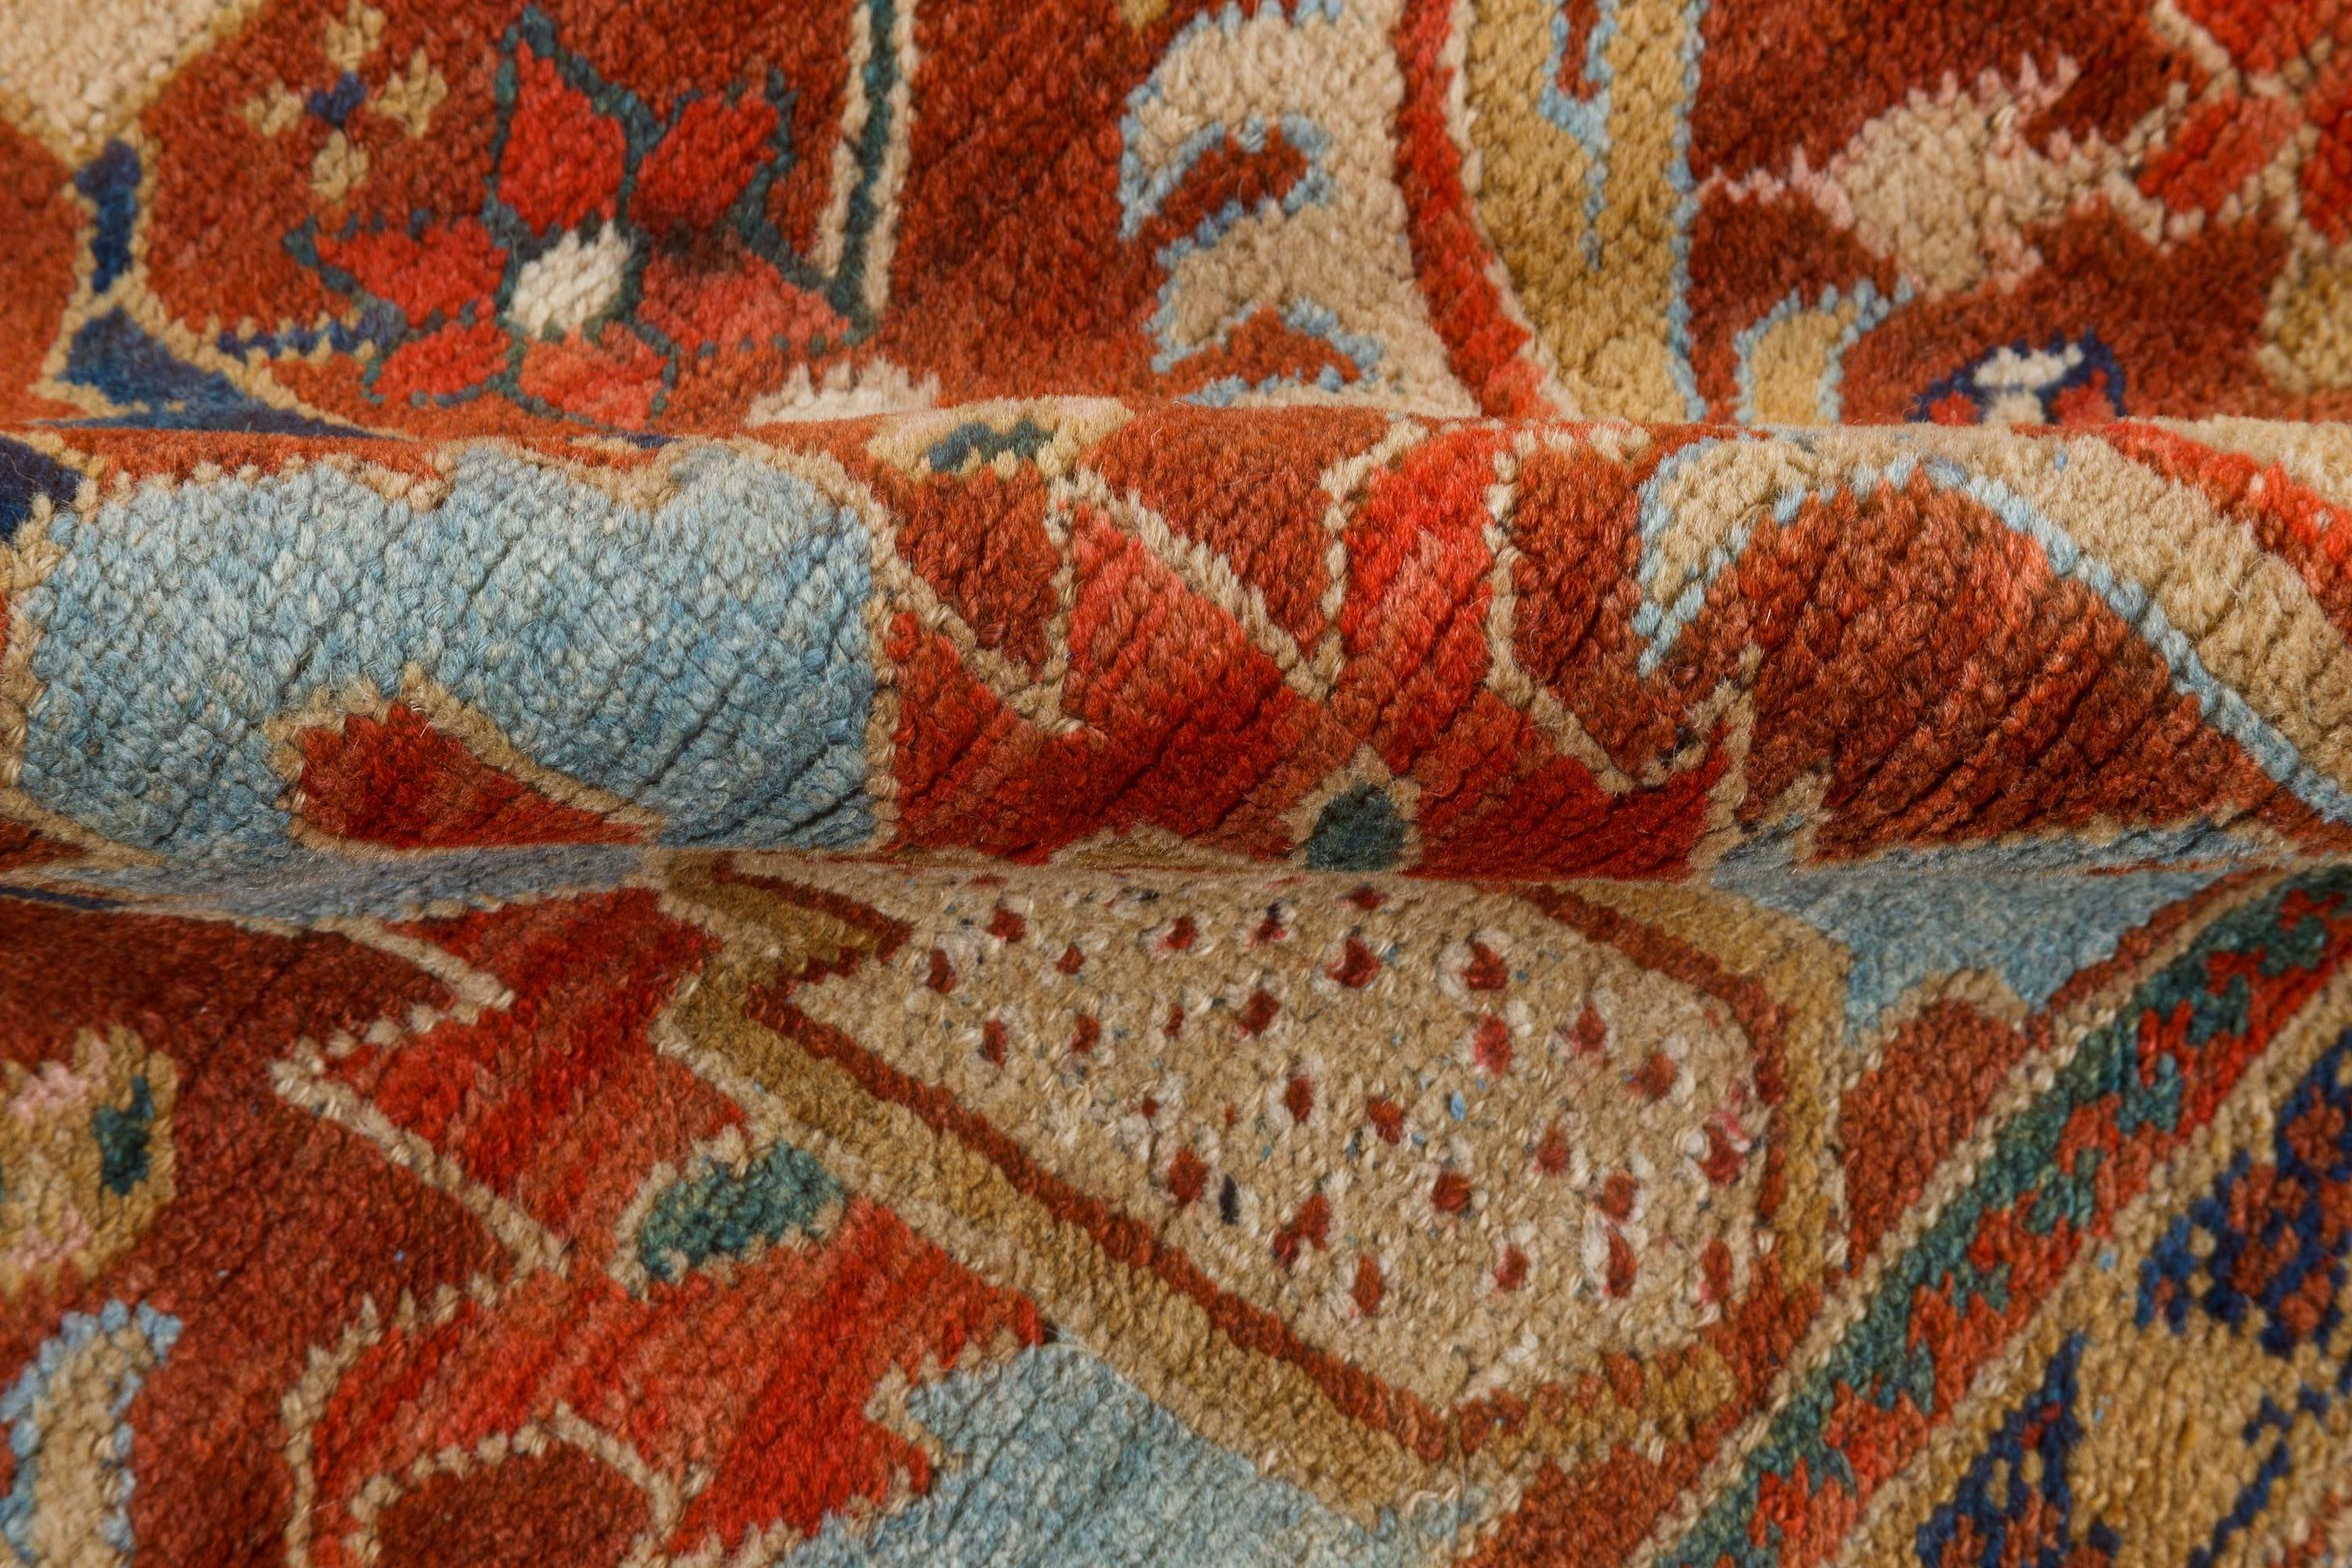 Early 20th Century Persian Heriz handwoven wool carpet
Size: 10'8